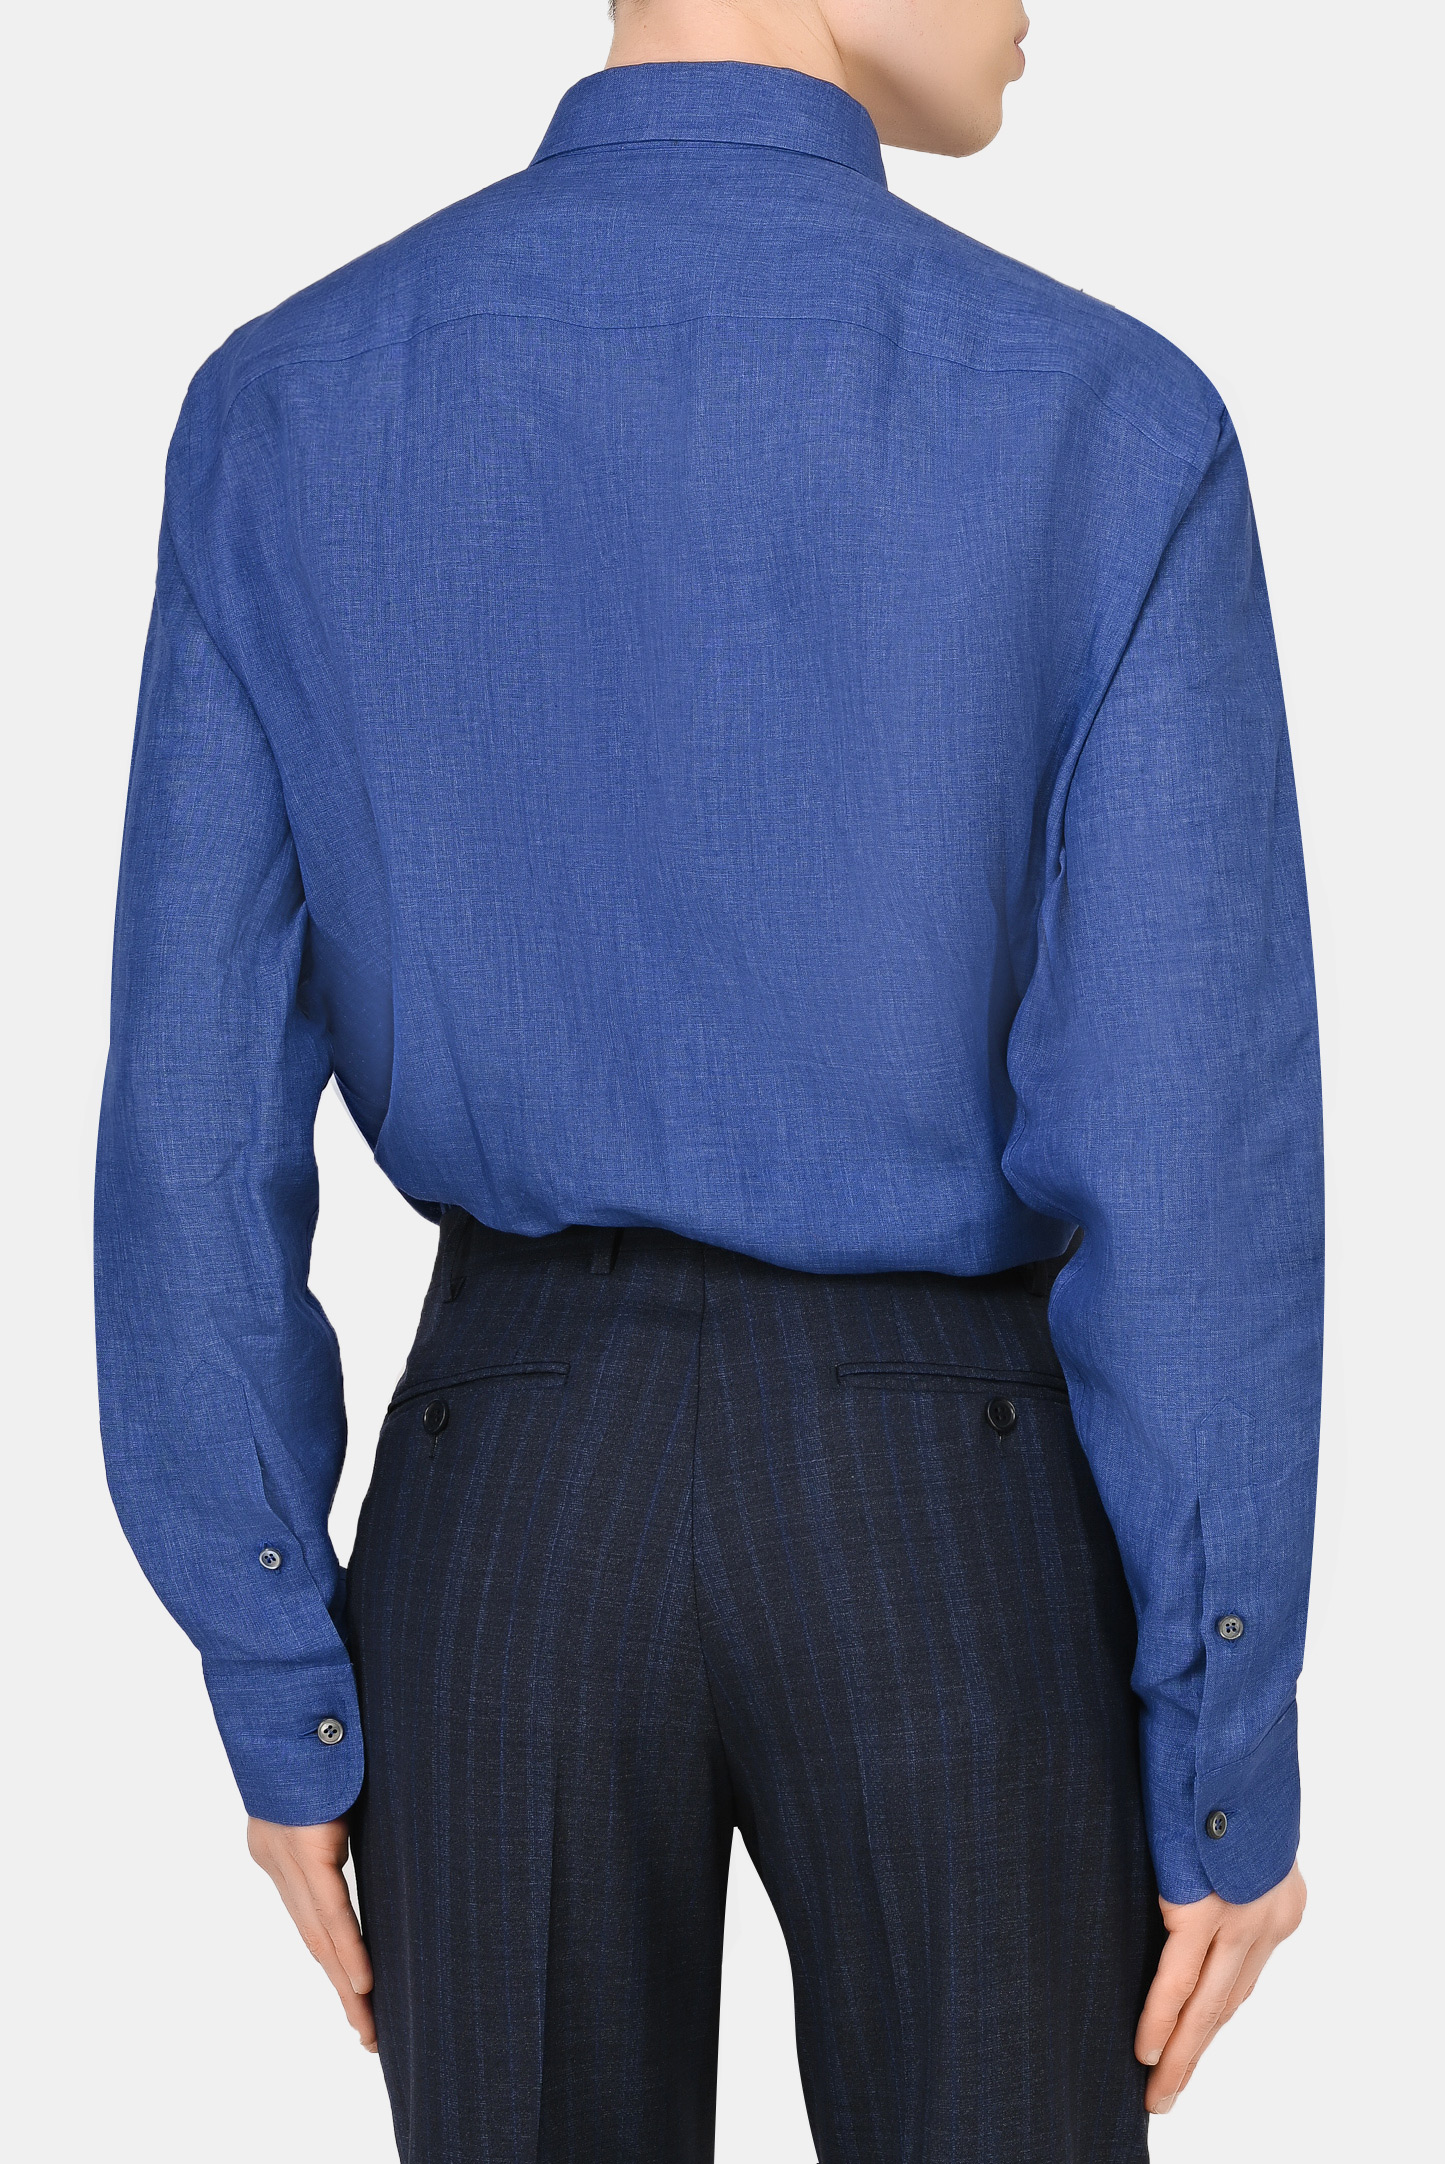 Рубашка BRIONI SCAY0L P9111, цвет: Синий, Мужской